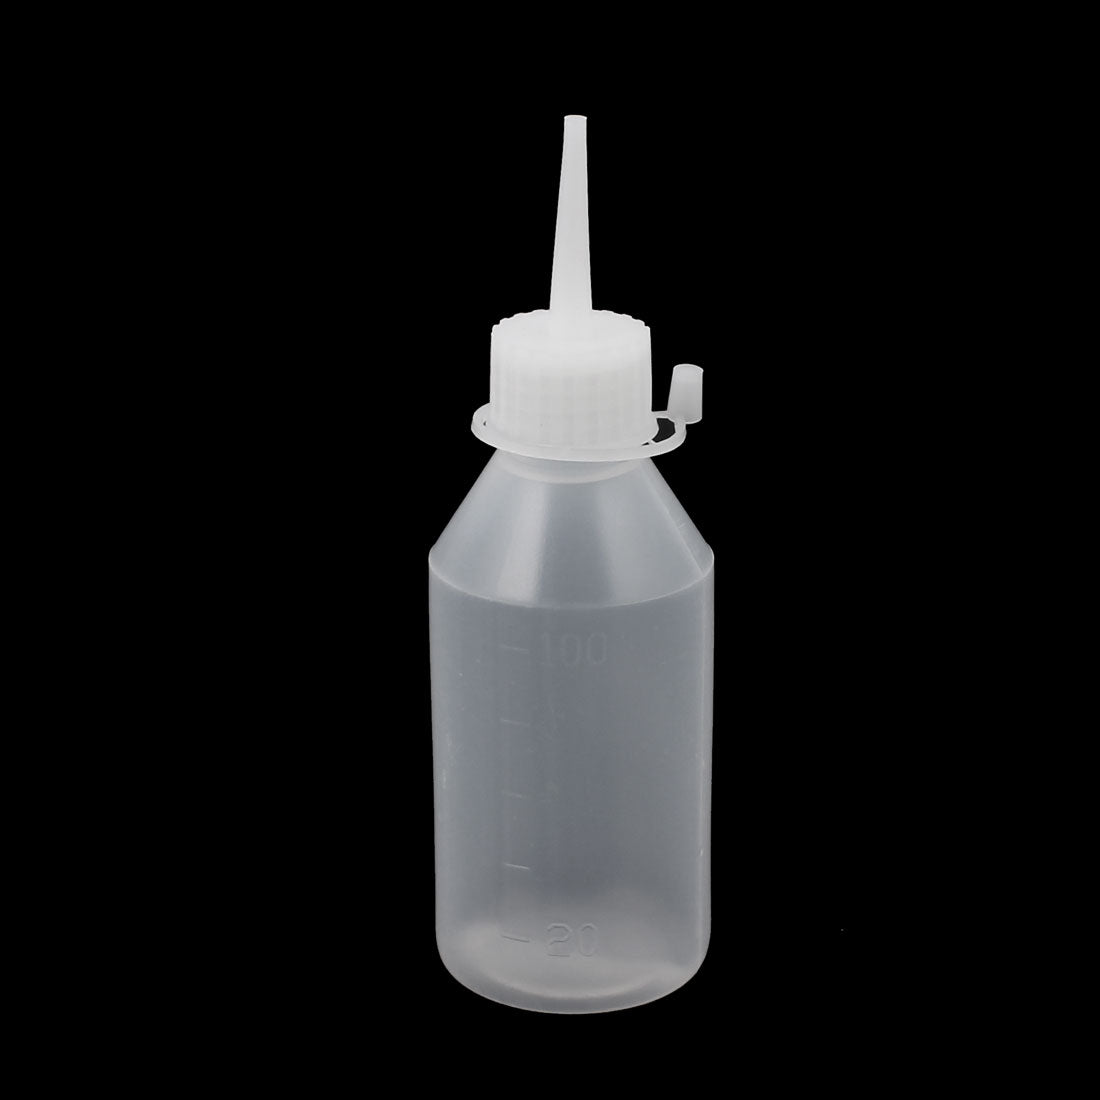 uxcell Uxcell YH-2L Plastic Kitchen Laboratory Squeeze Bottle Dispenser 100ML 3 Pcs